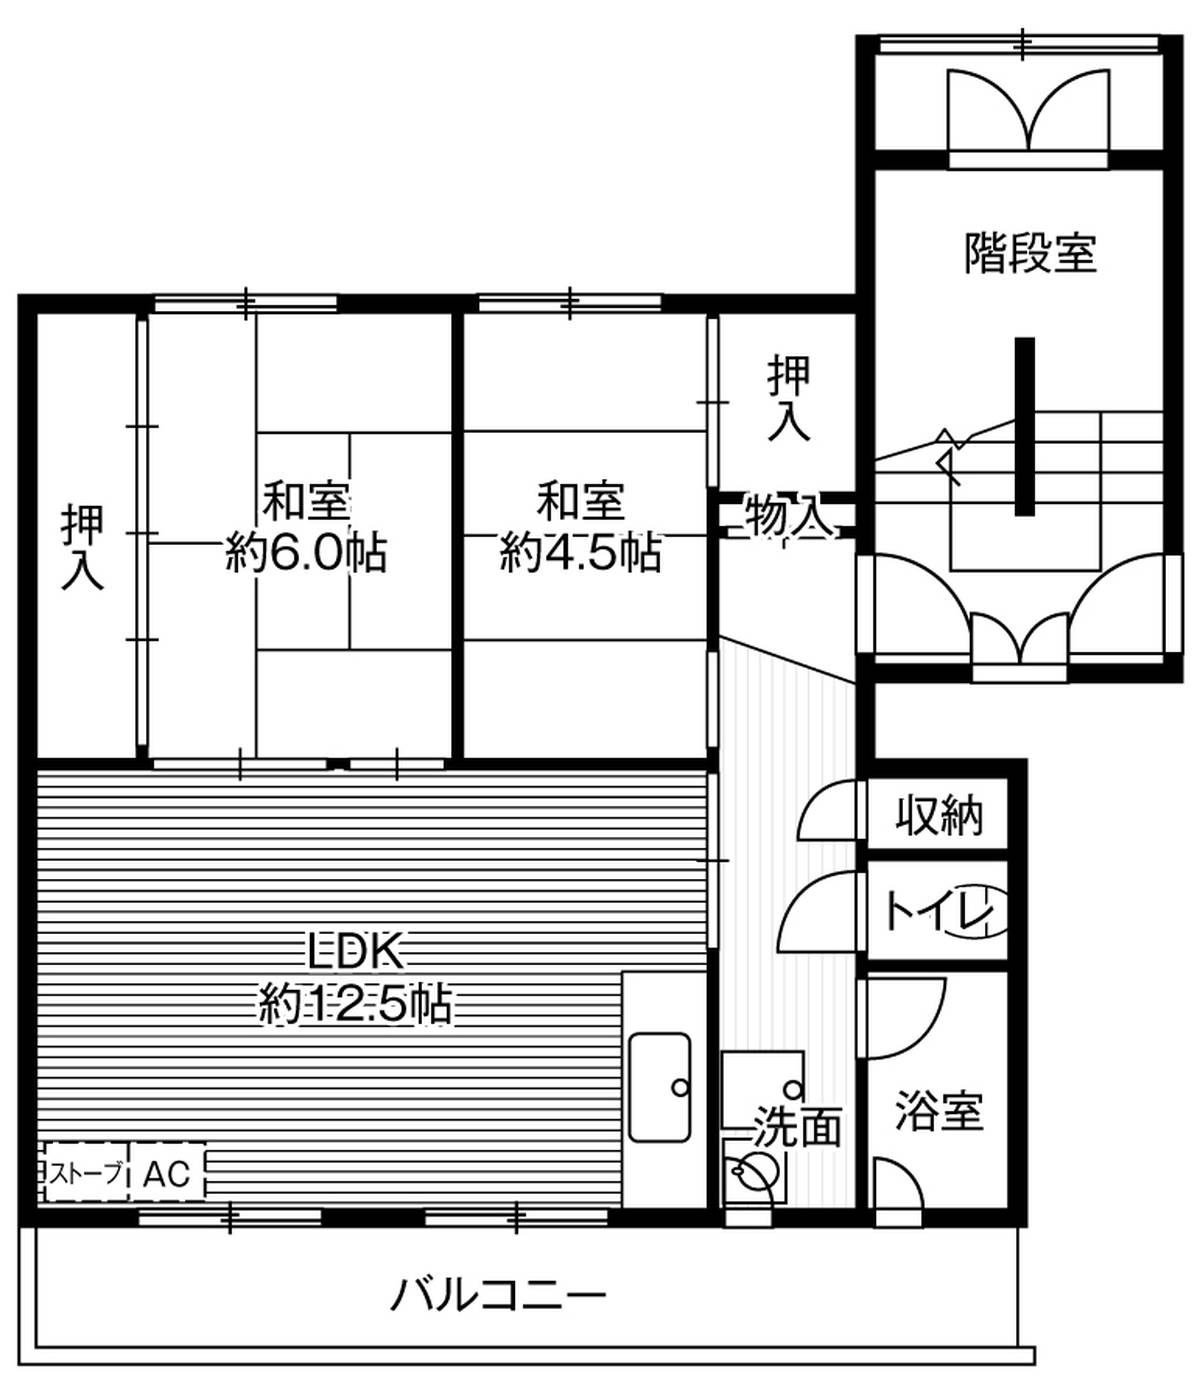 2LDK floorplan of Village House Shin Higashimachi in Iwamizawa-shi